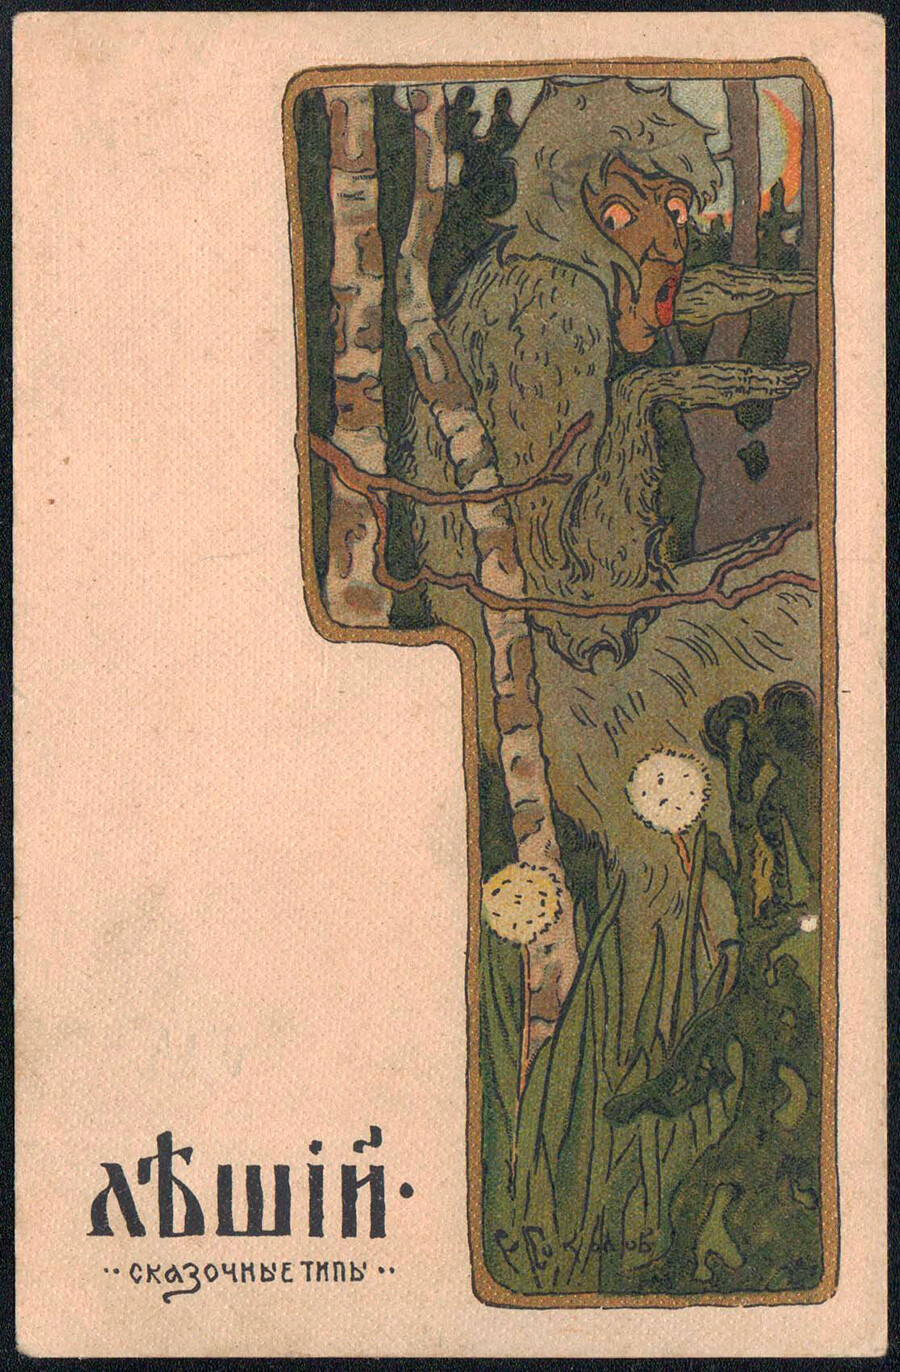 Leshi, otro dibujo de principios del siglo XX
